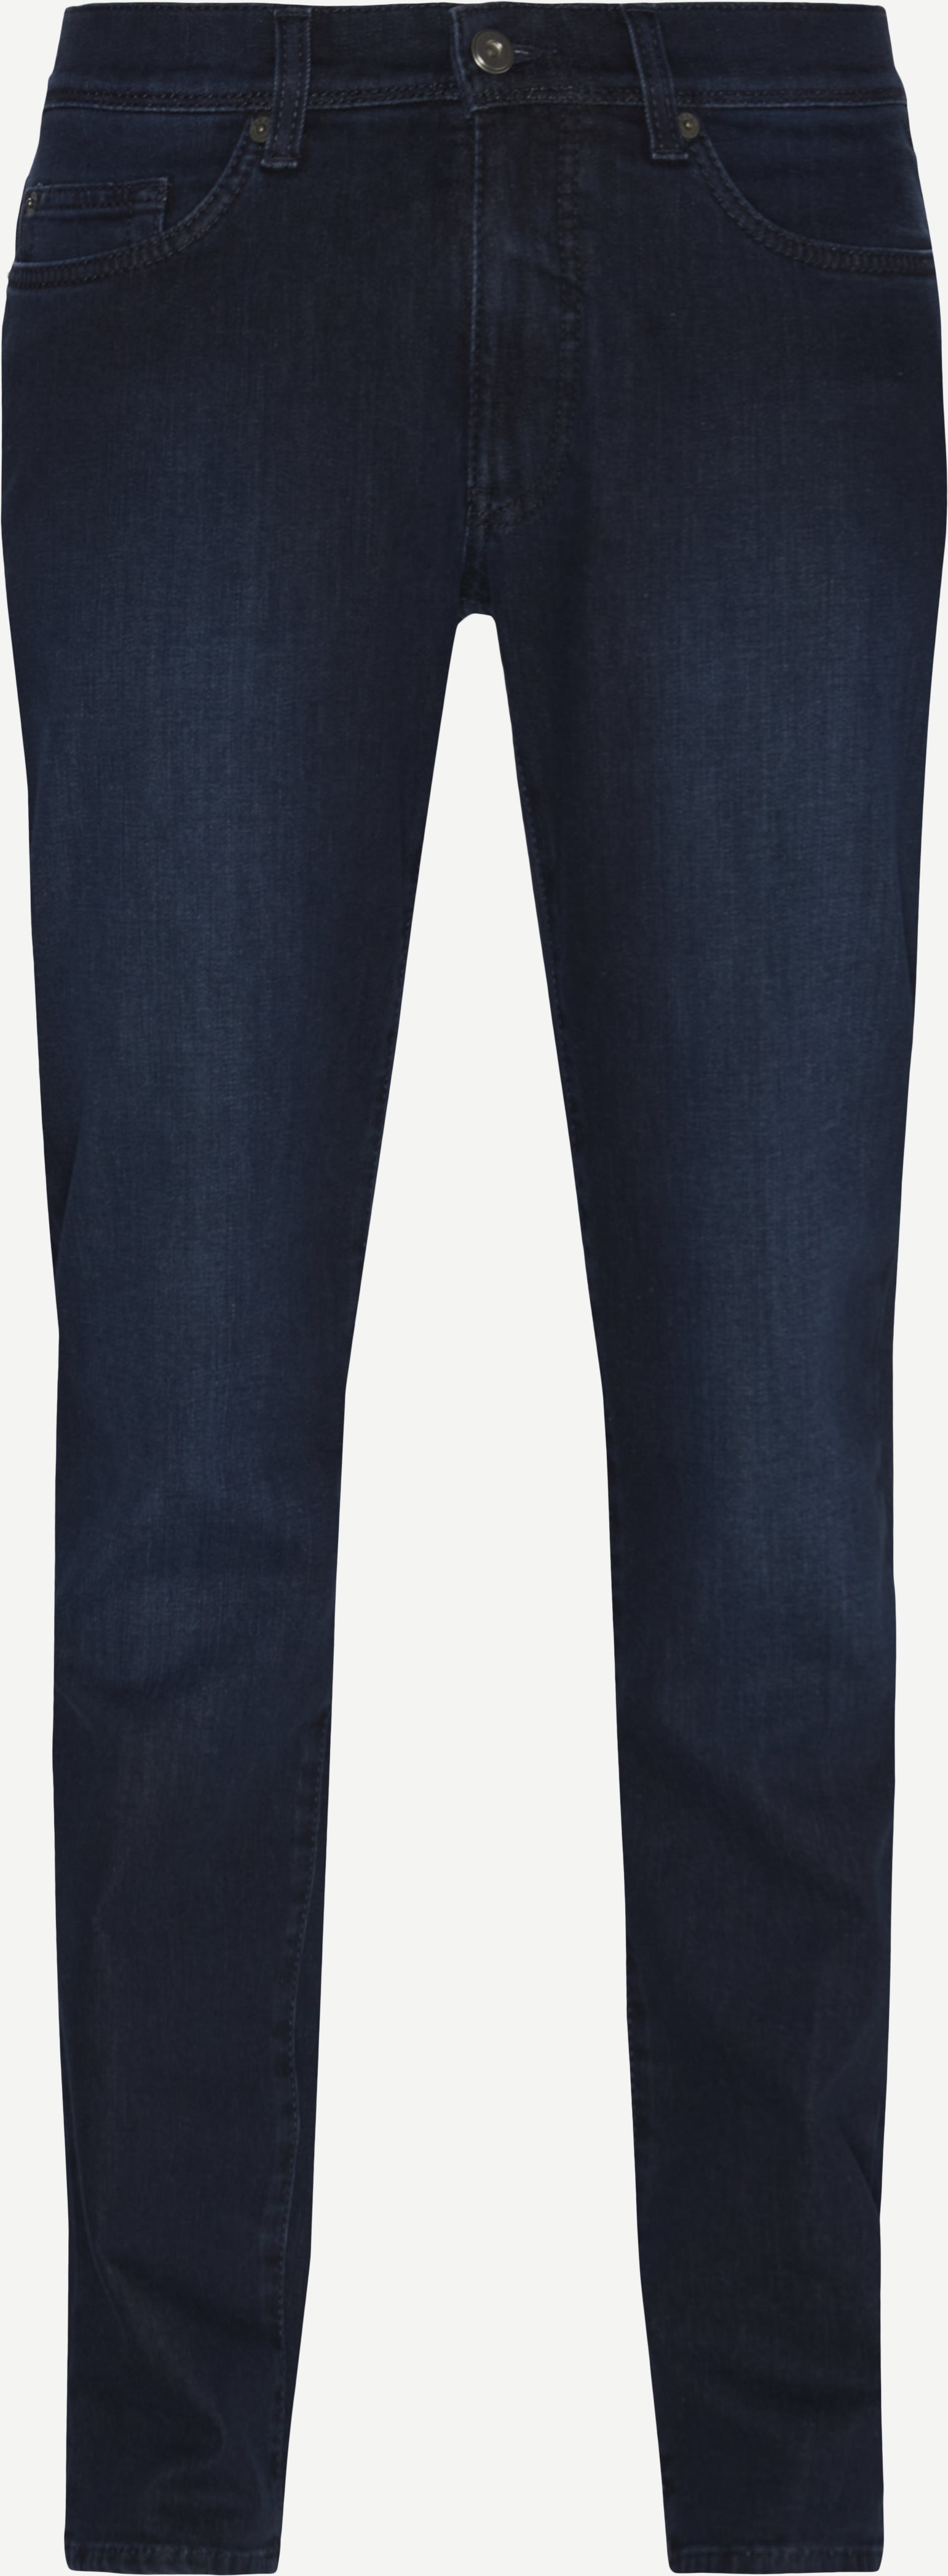 Cadiz Jeans - Jeans - Straight fit - Denim